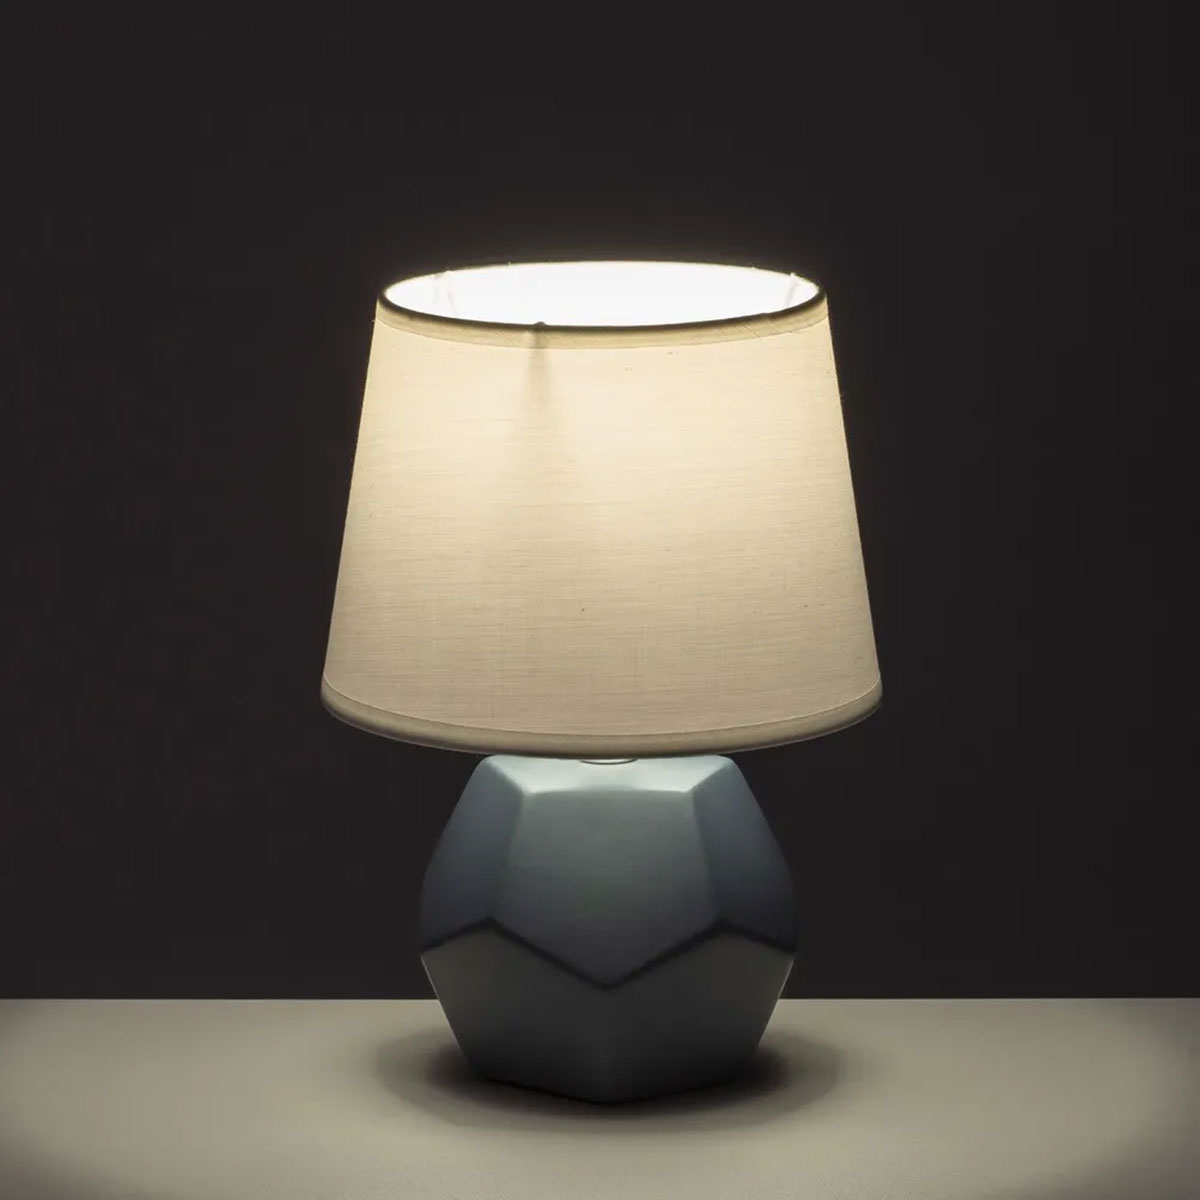 Ceramic lamp 26 cm - gray